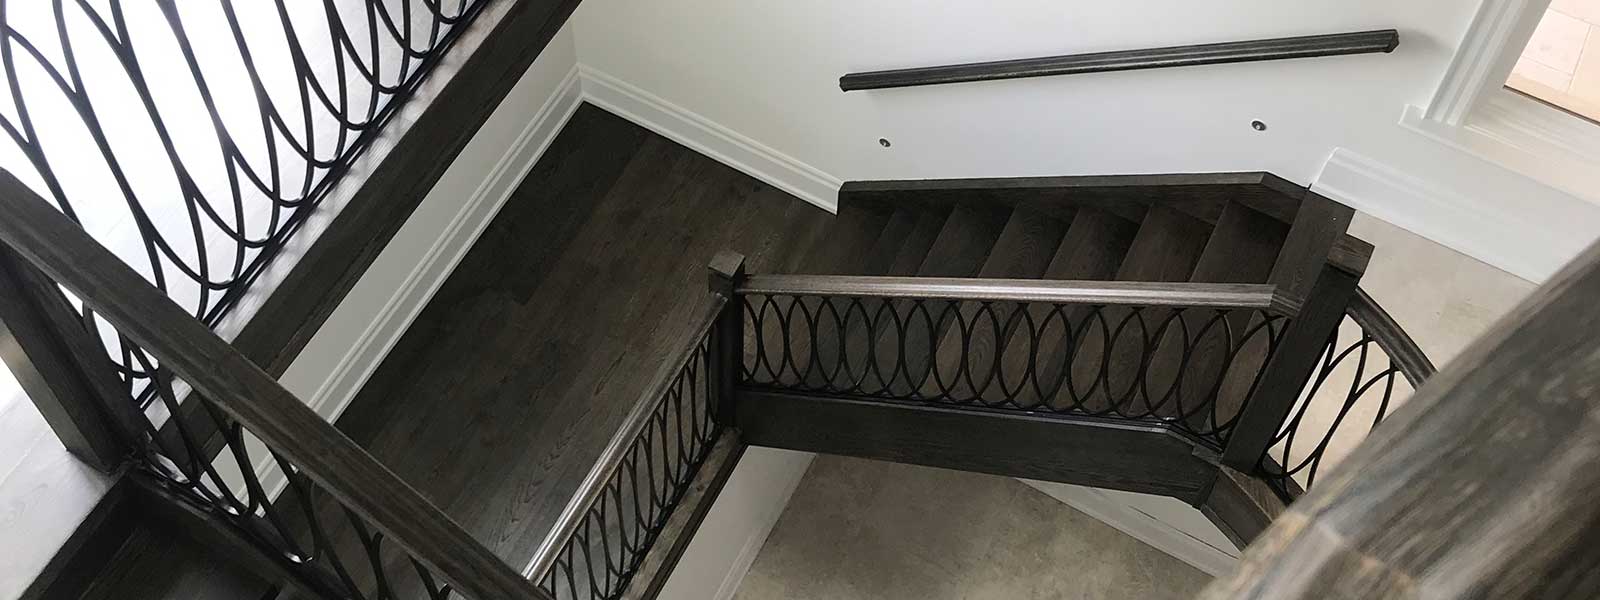 hardwood stairs